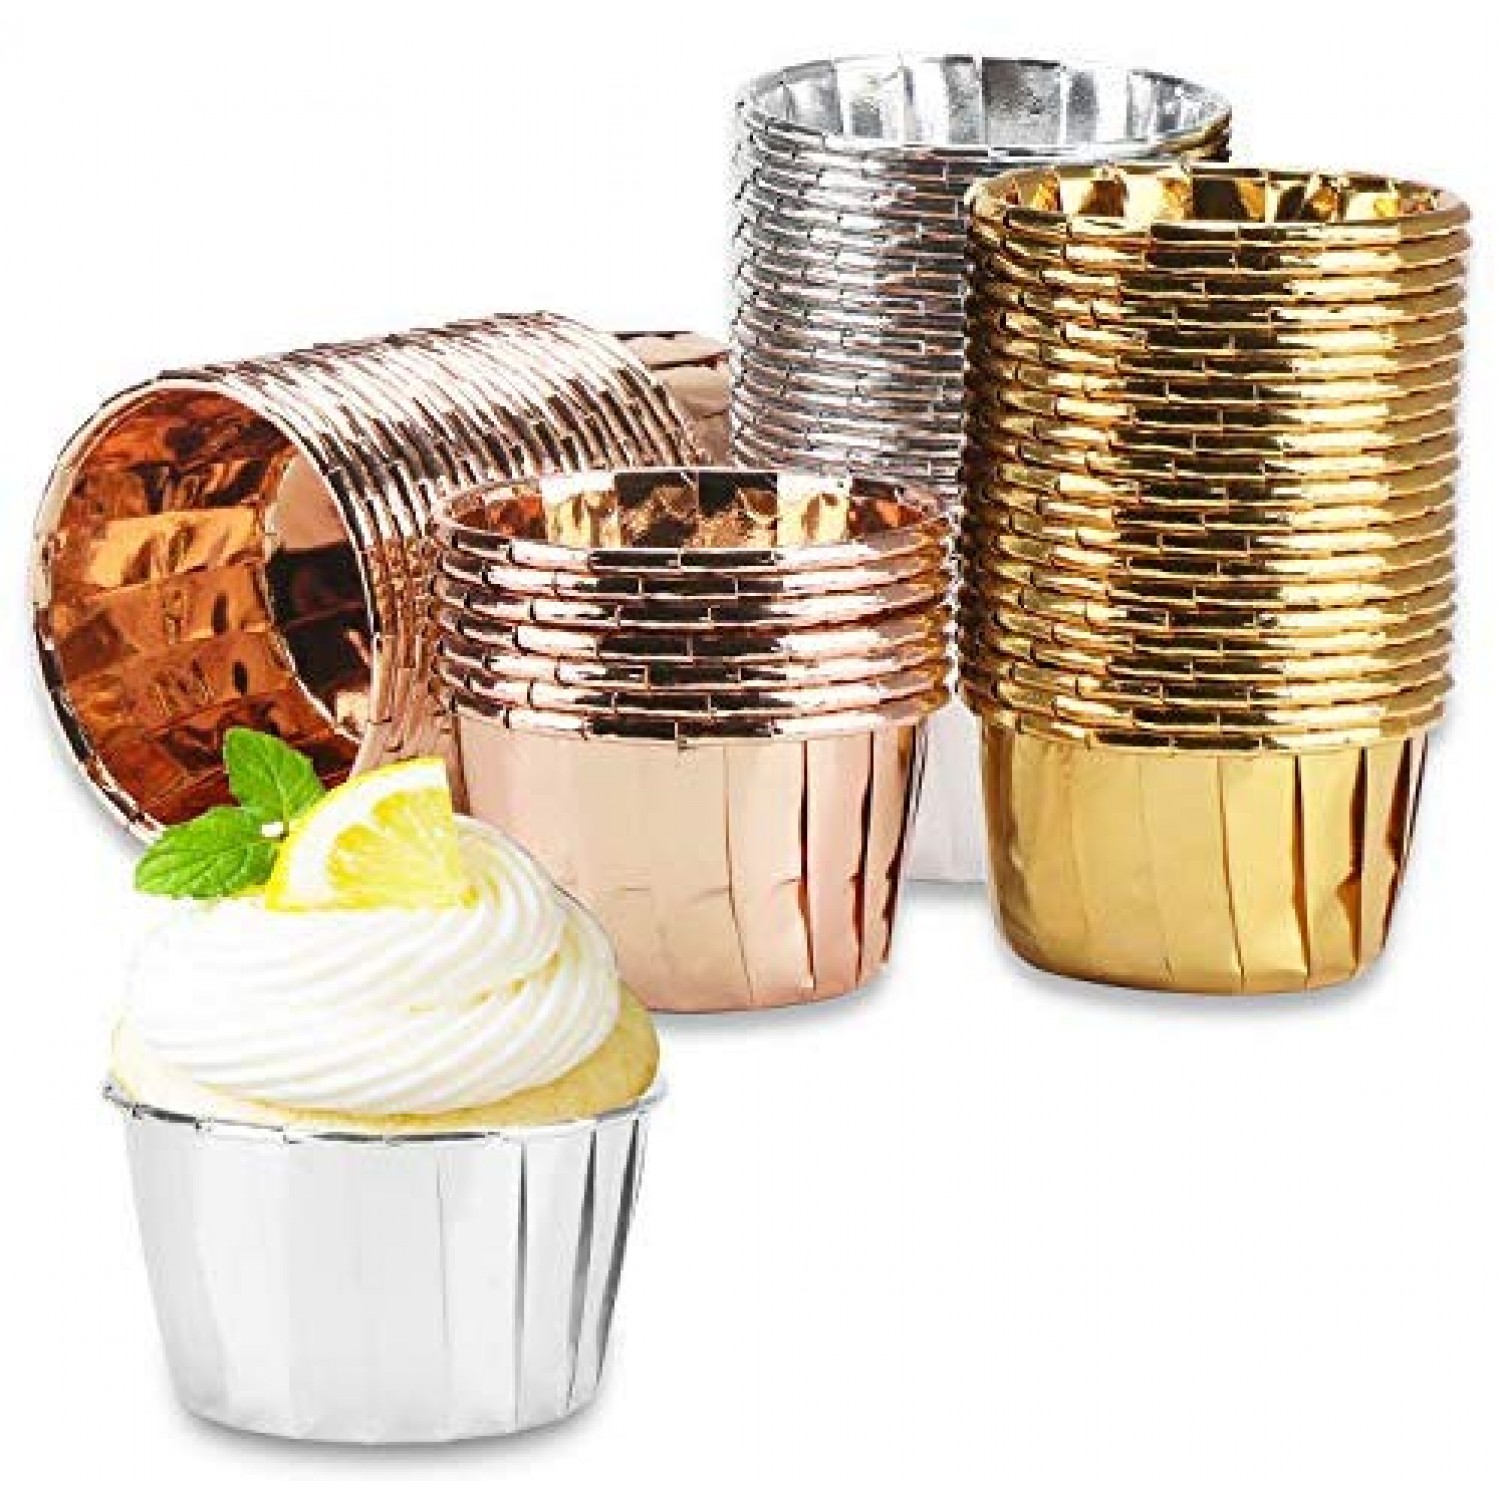 Foil Dessert Ramekins with Lids, Cupcake Baking Cups for Parties